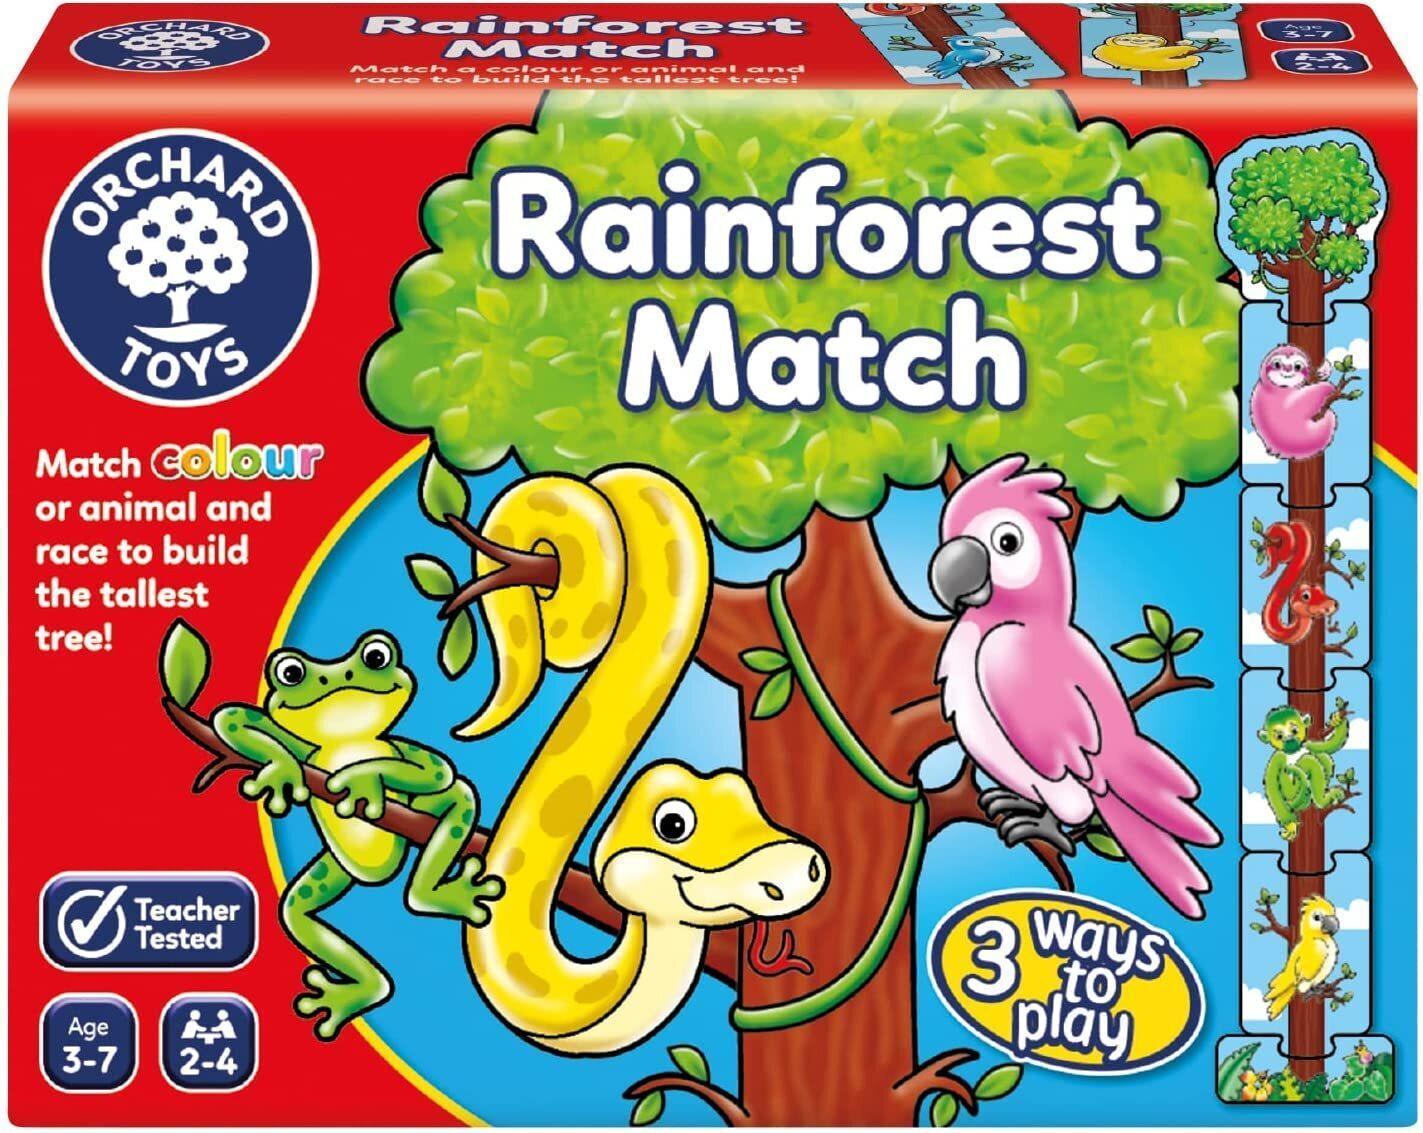 Orchard Game - Rainforest Match